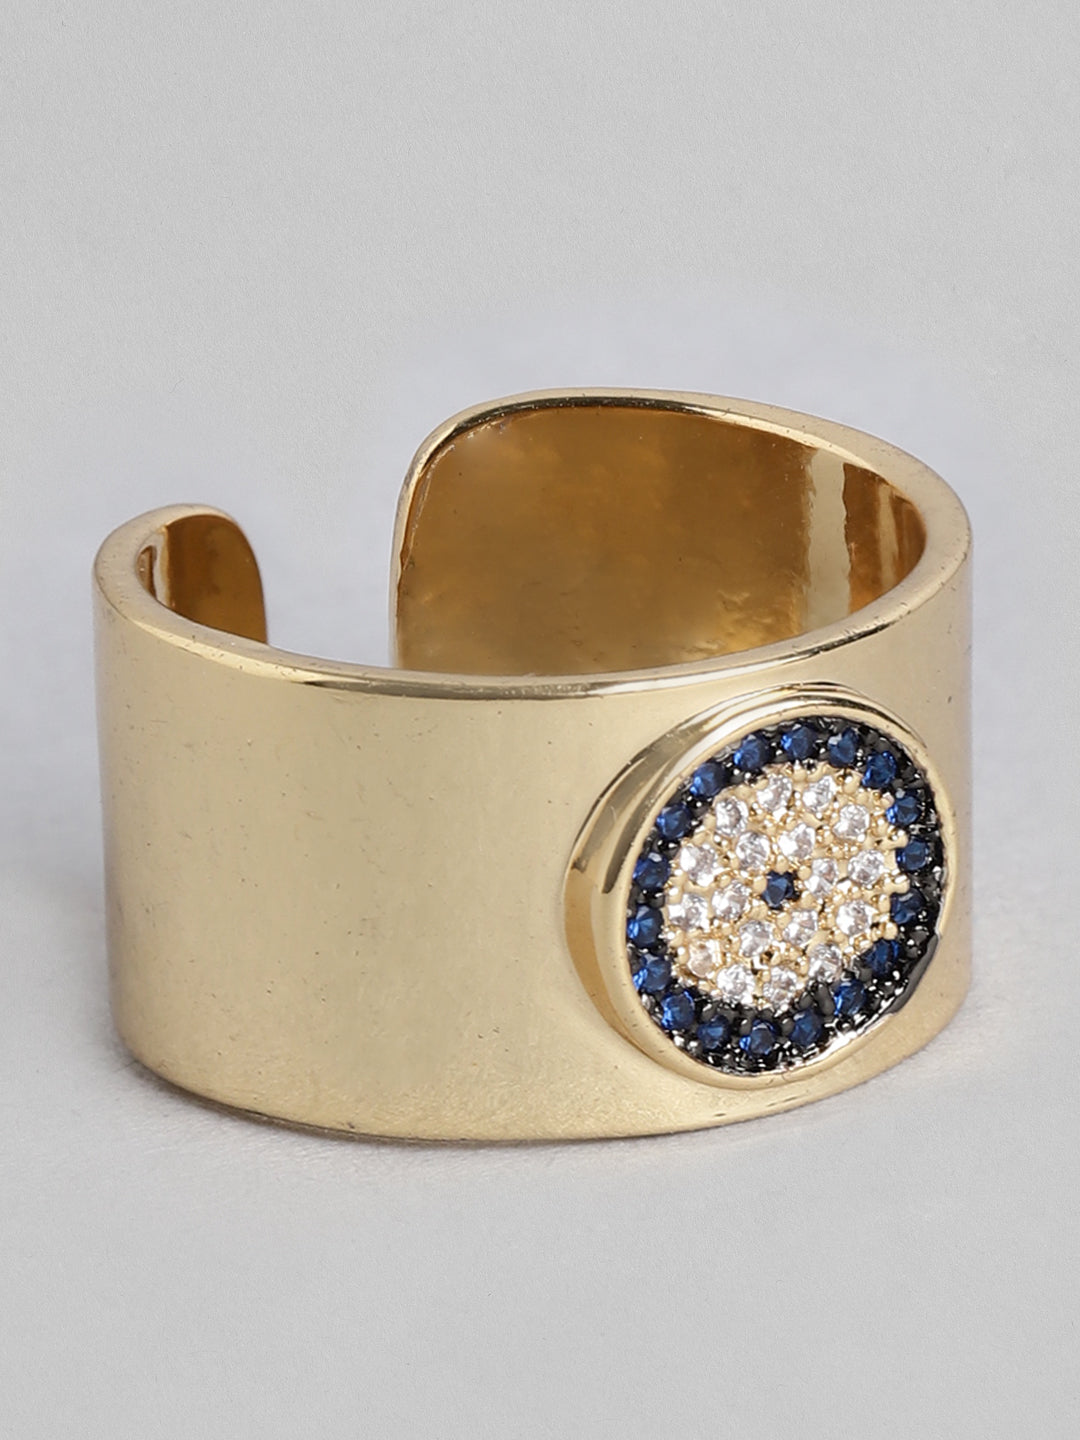 Blueberry Evil Eye gold plated ring